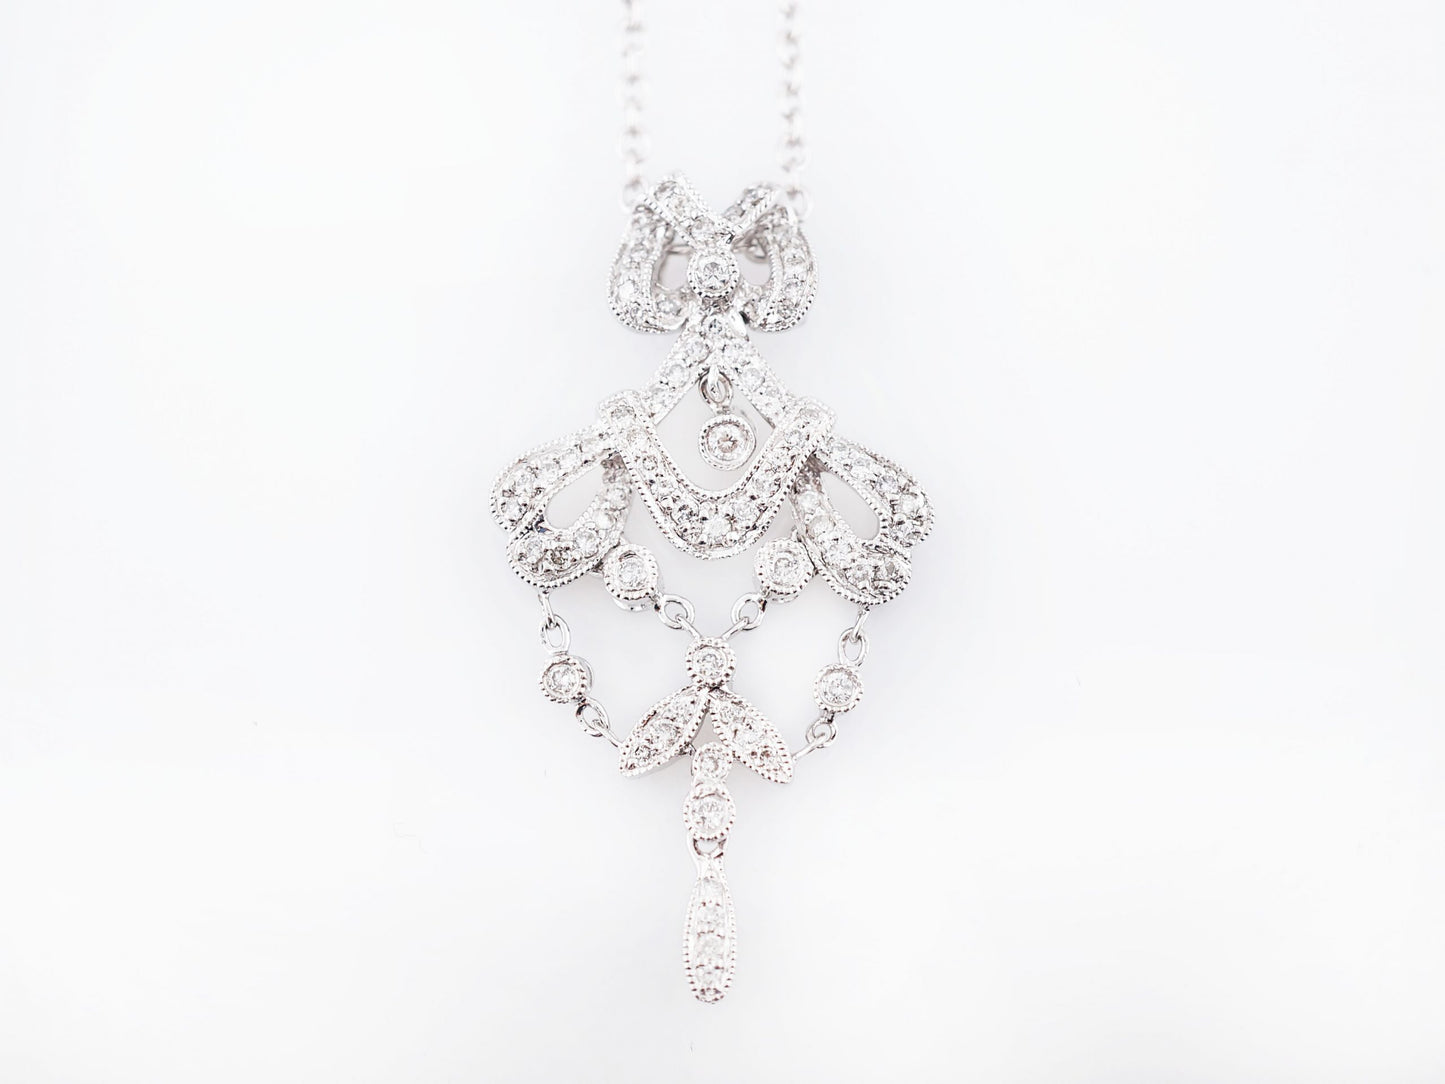 Modern Necklace .39 Round Brilliant Cut Diamonds in 14k White Gold